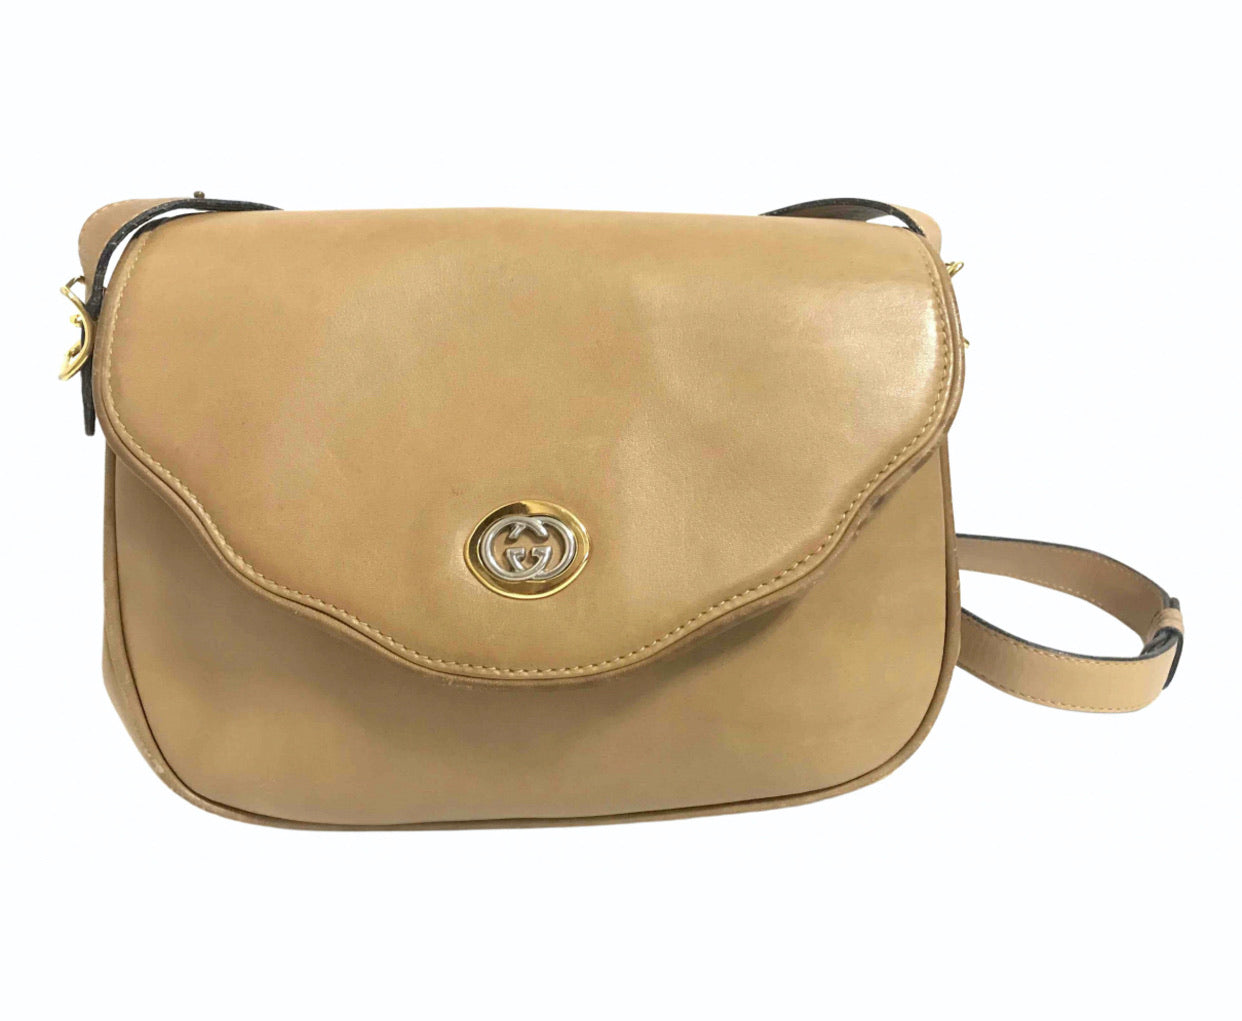 Gucci Horsebit 1955 mini bag in brown leather | GUCCI® US